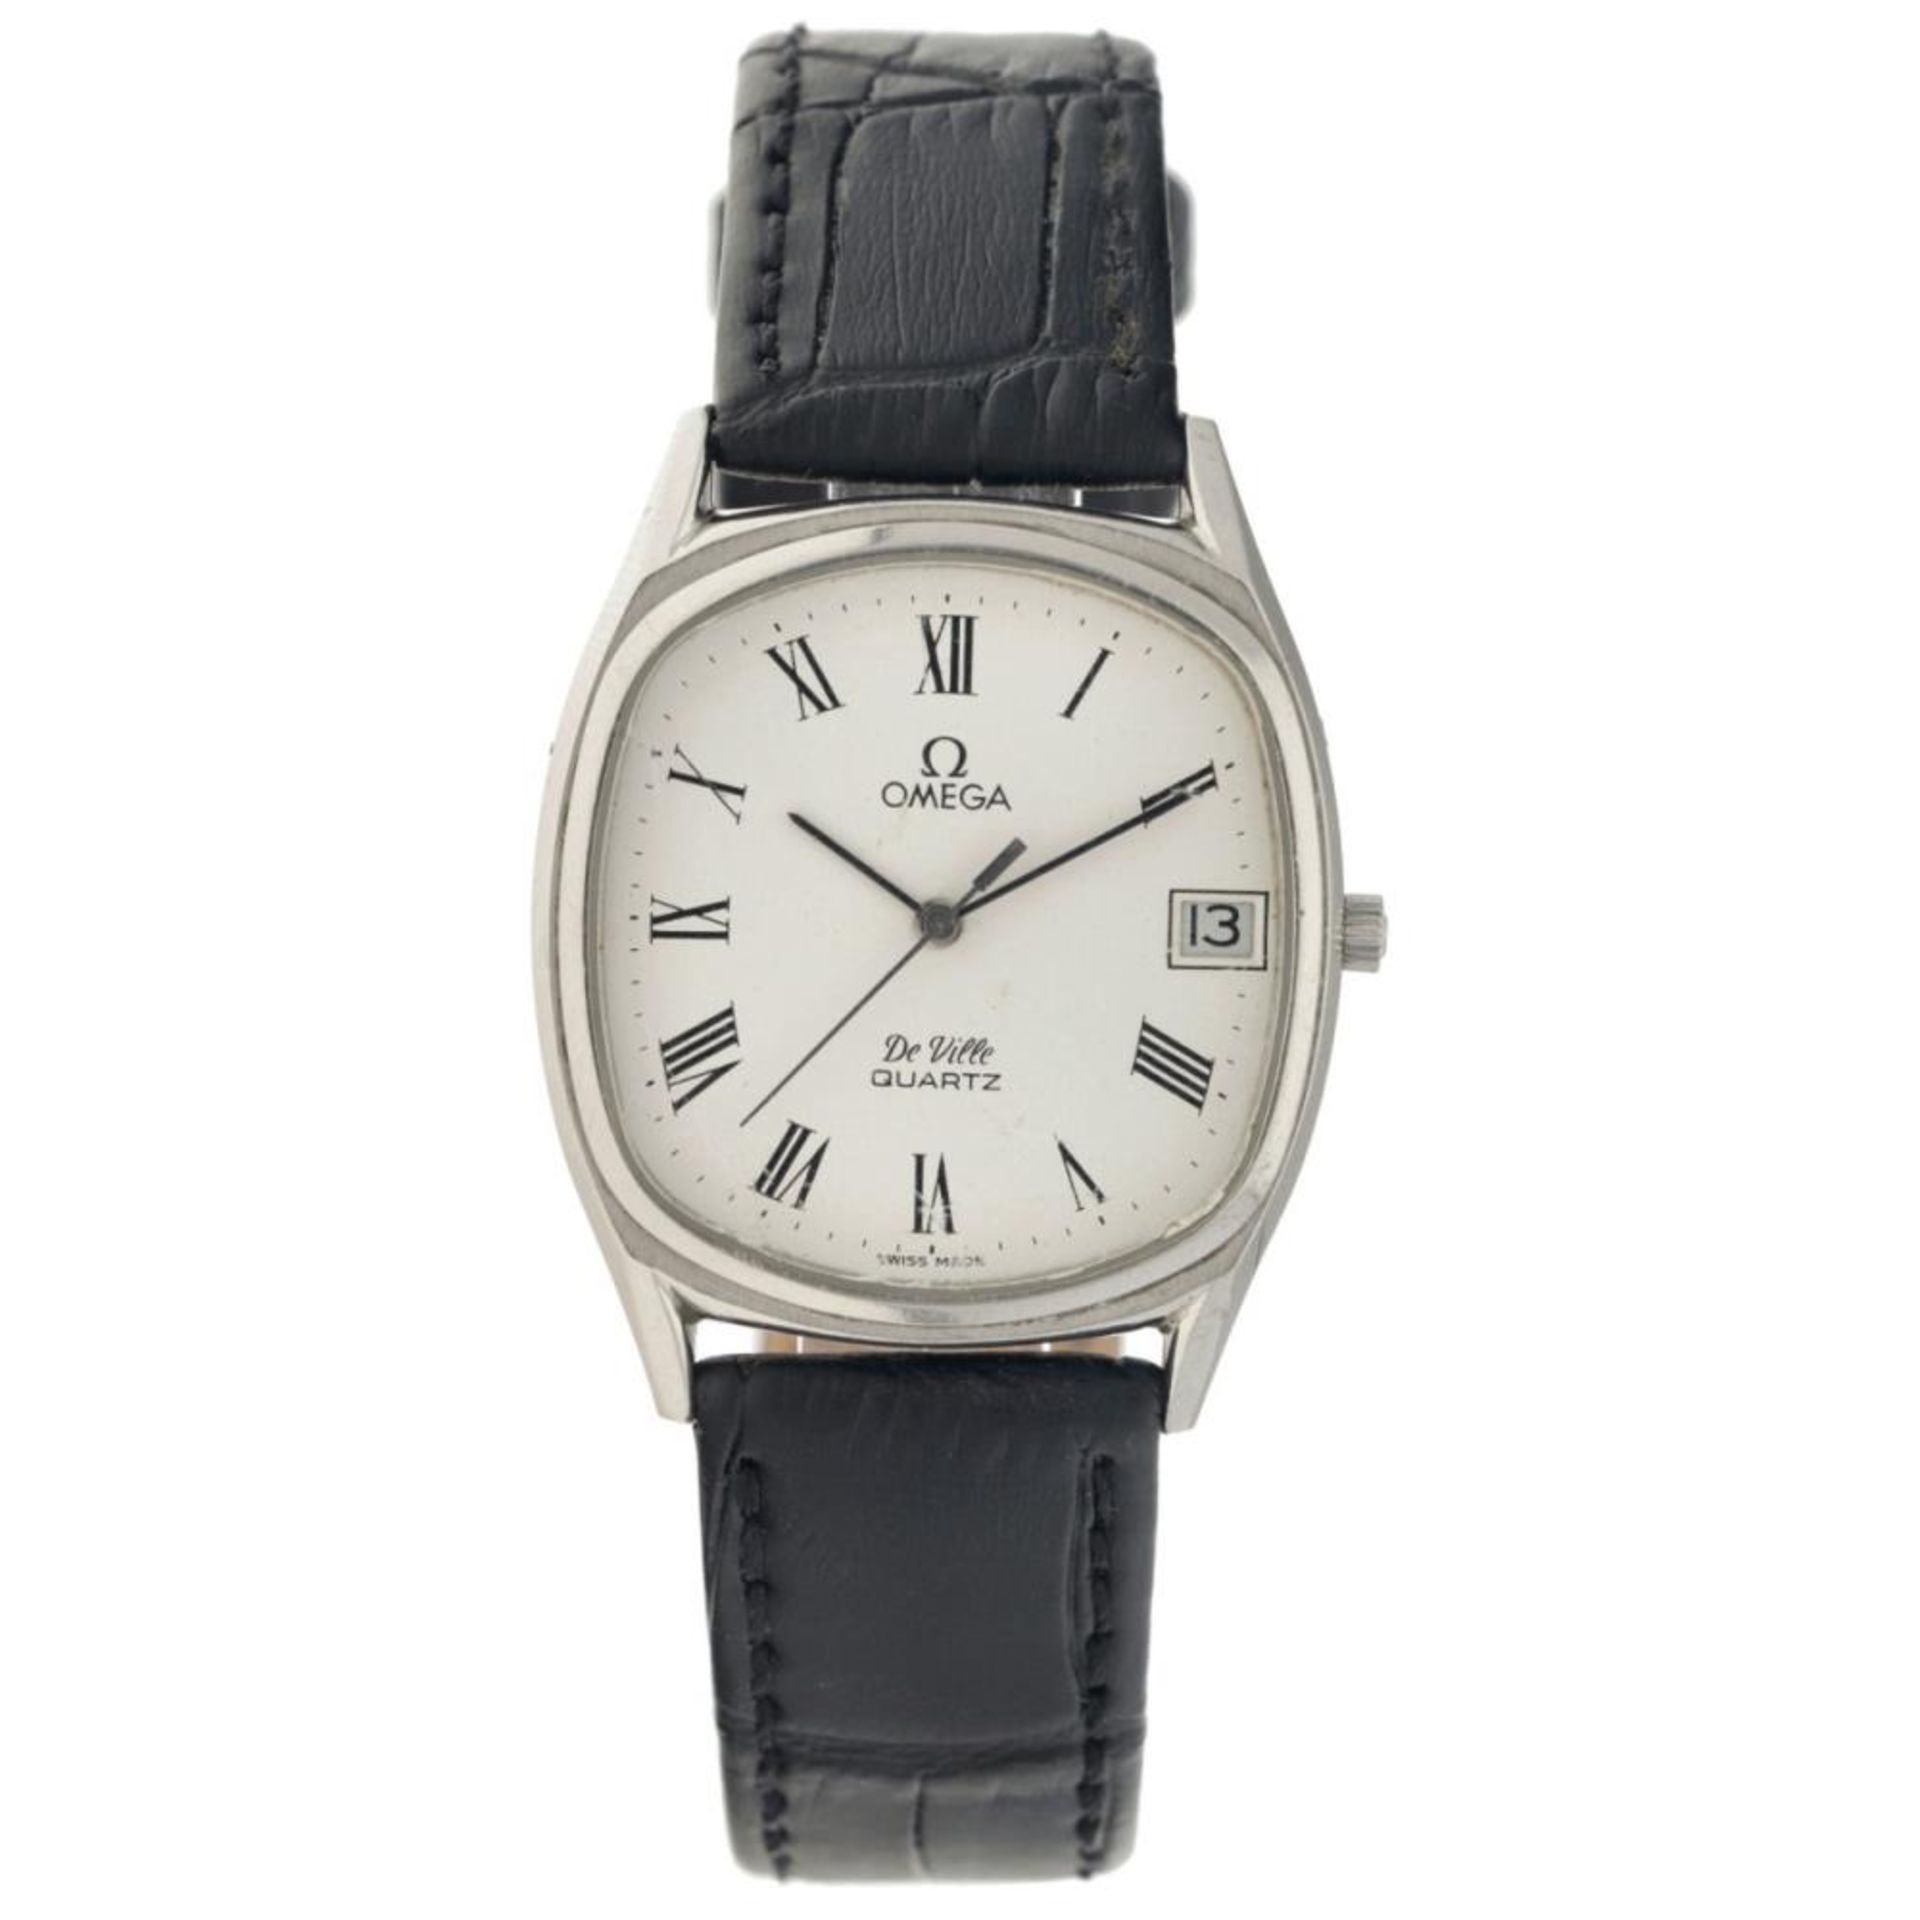 Omega de Ville 1920050 - Men's watch - approx. 1980.